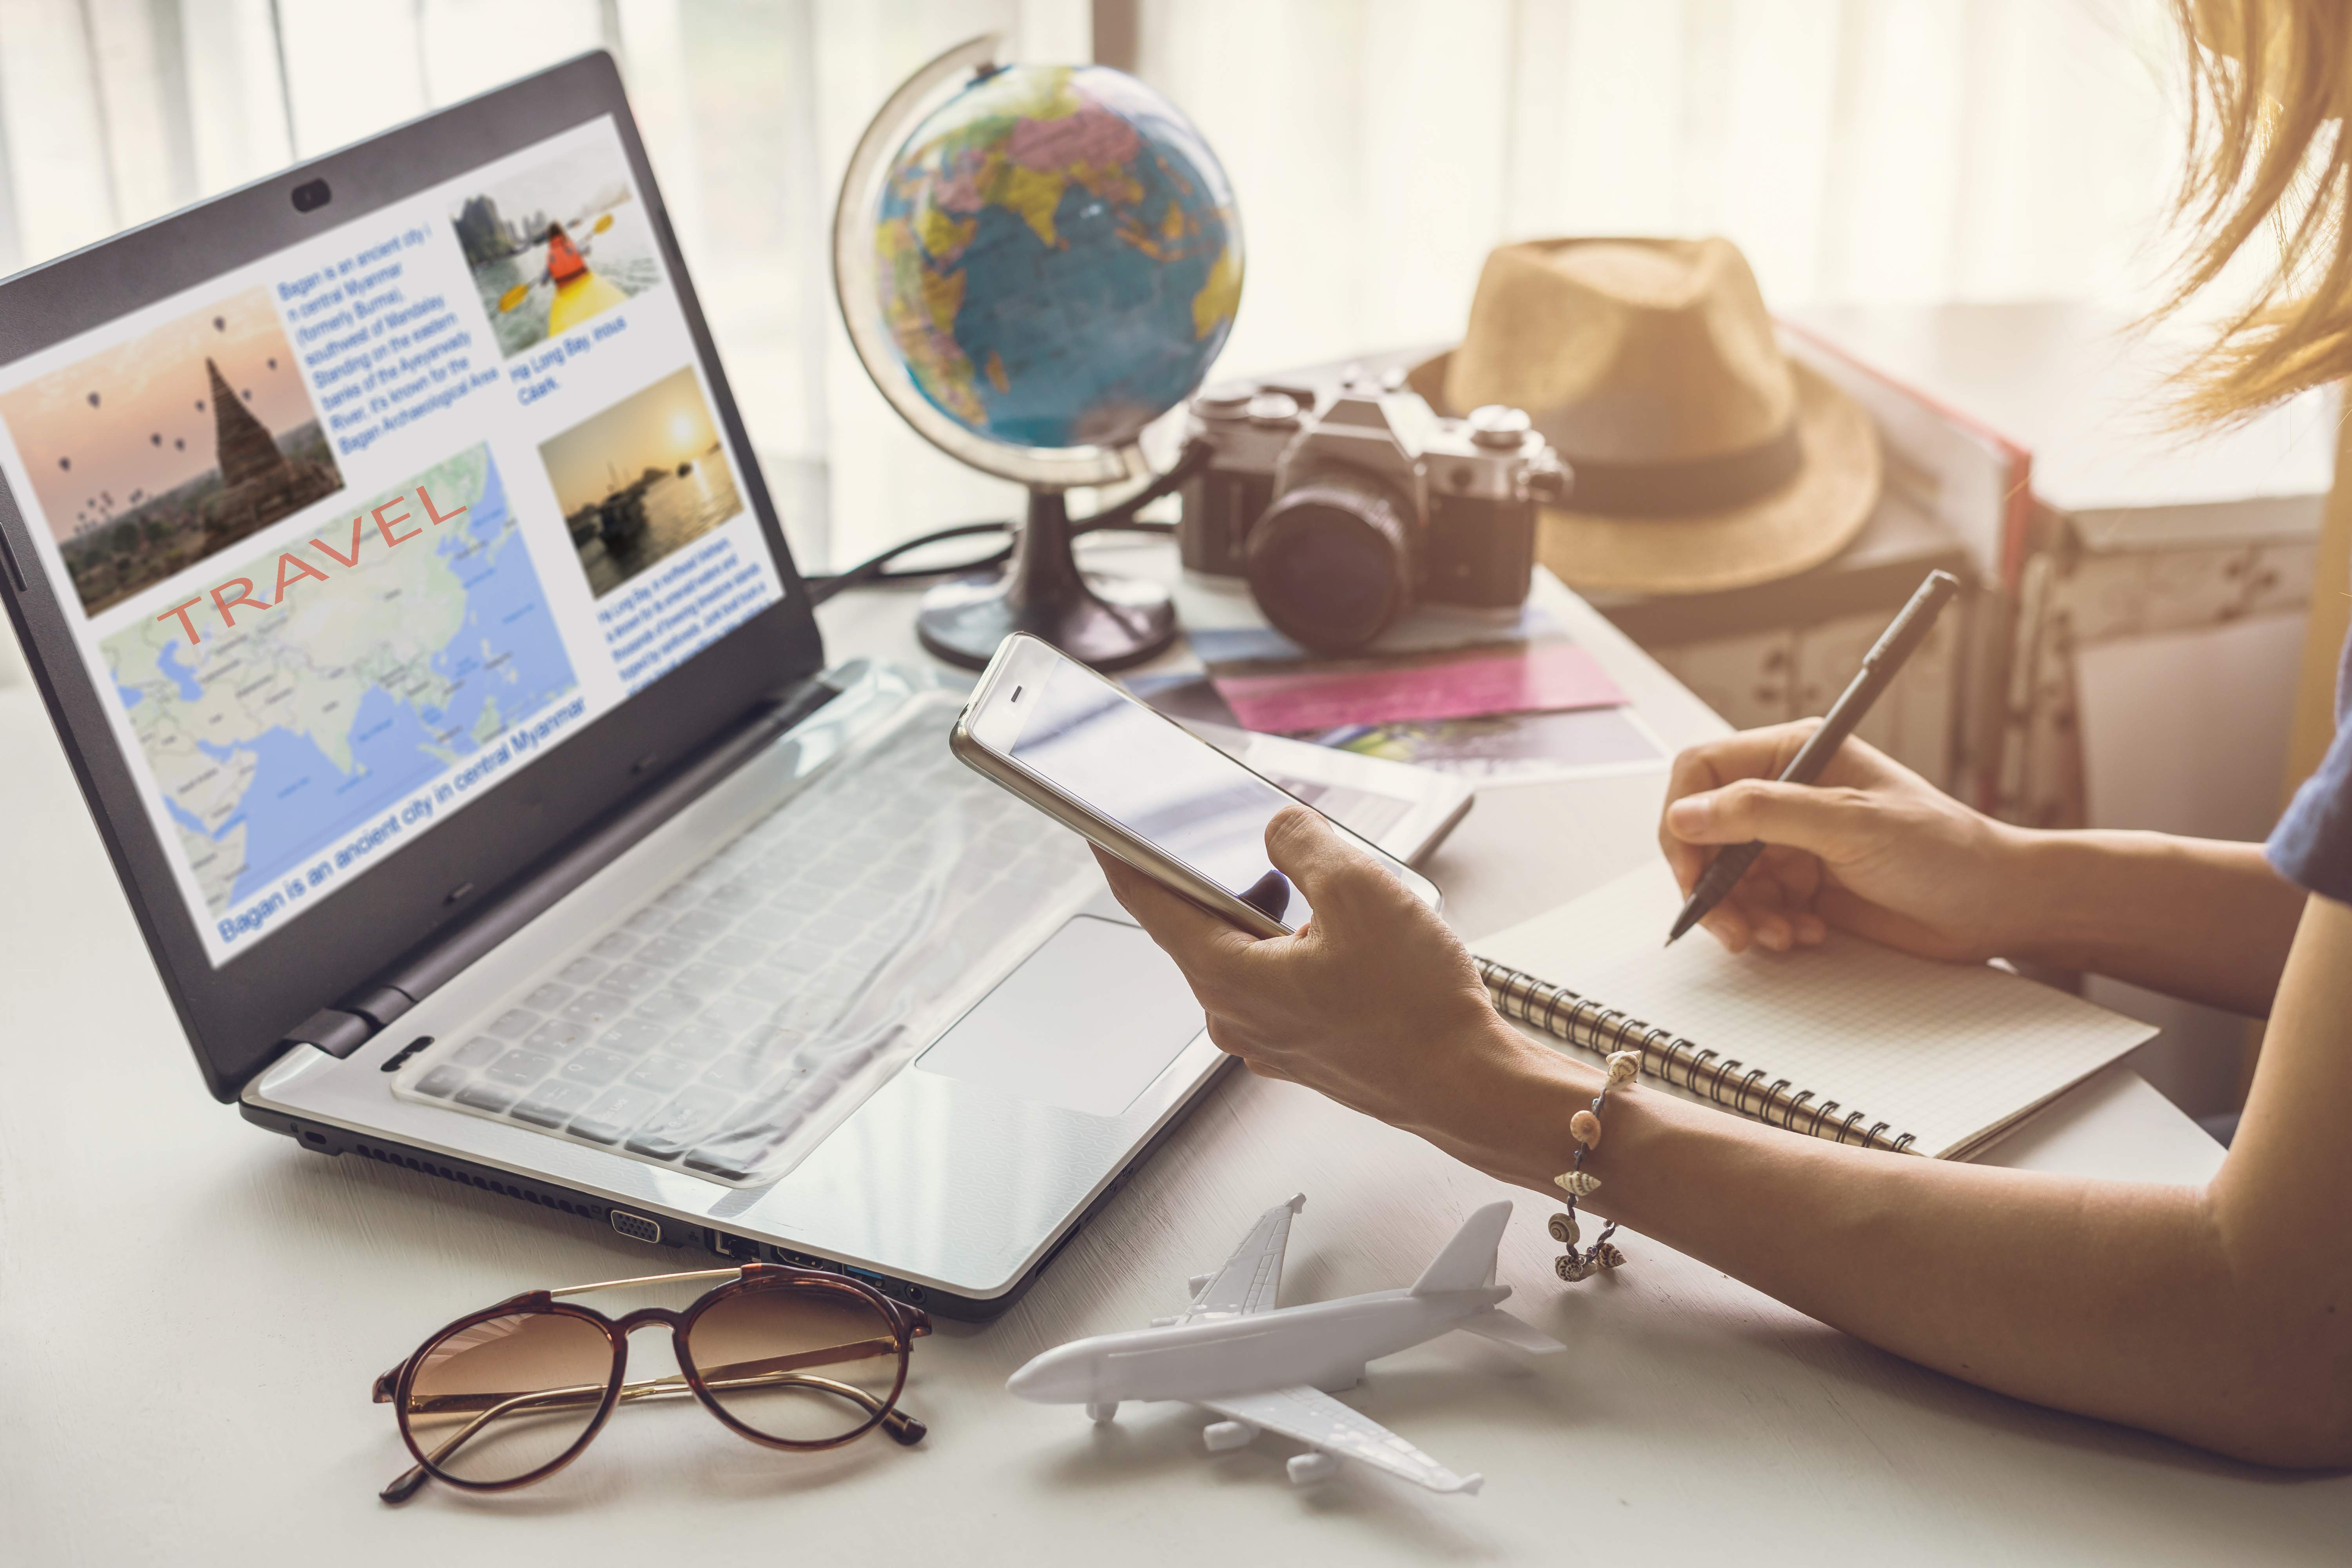 A woman planning a trip | Source: Shutterstock